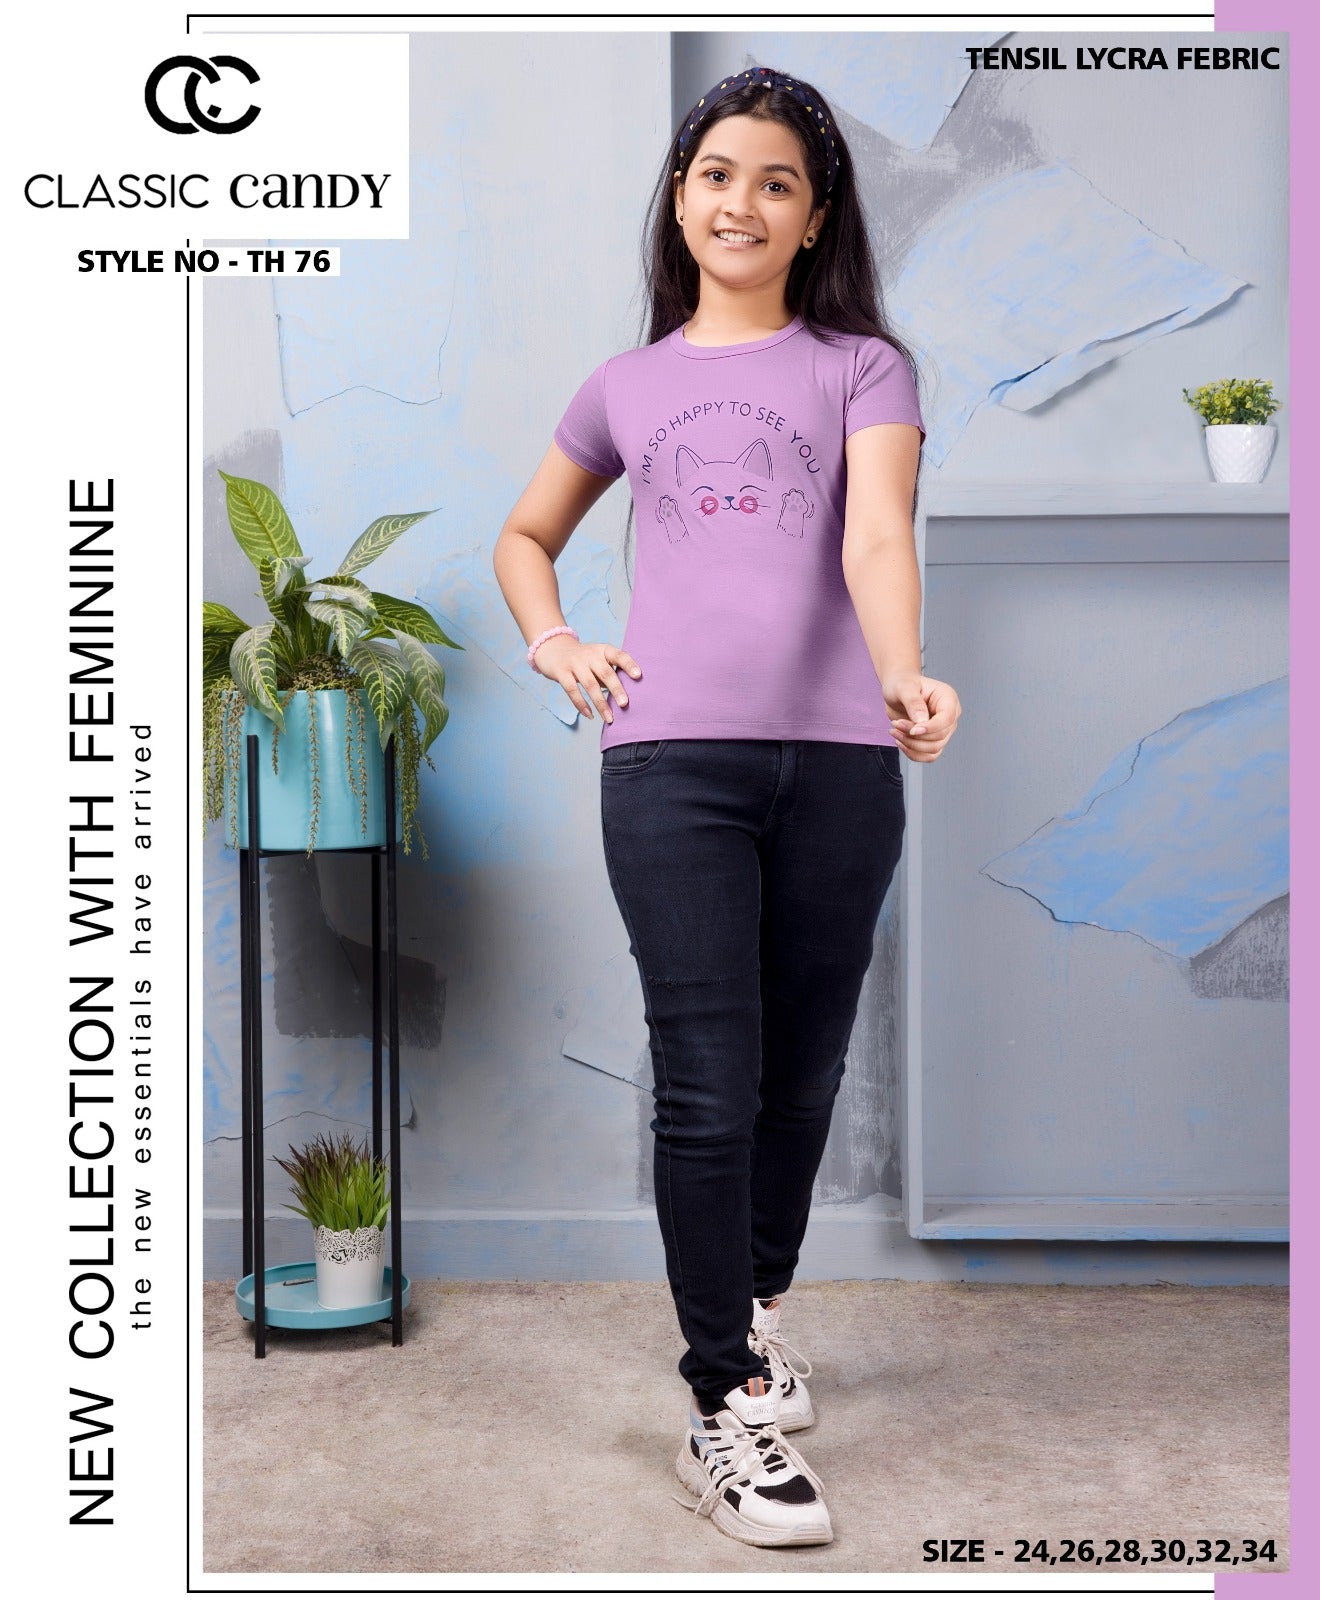 Th-76 Classic Candy Tencil Lycra Girls Tshirt